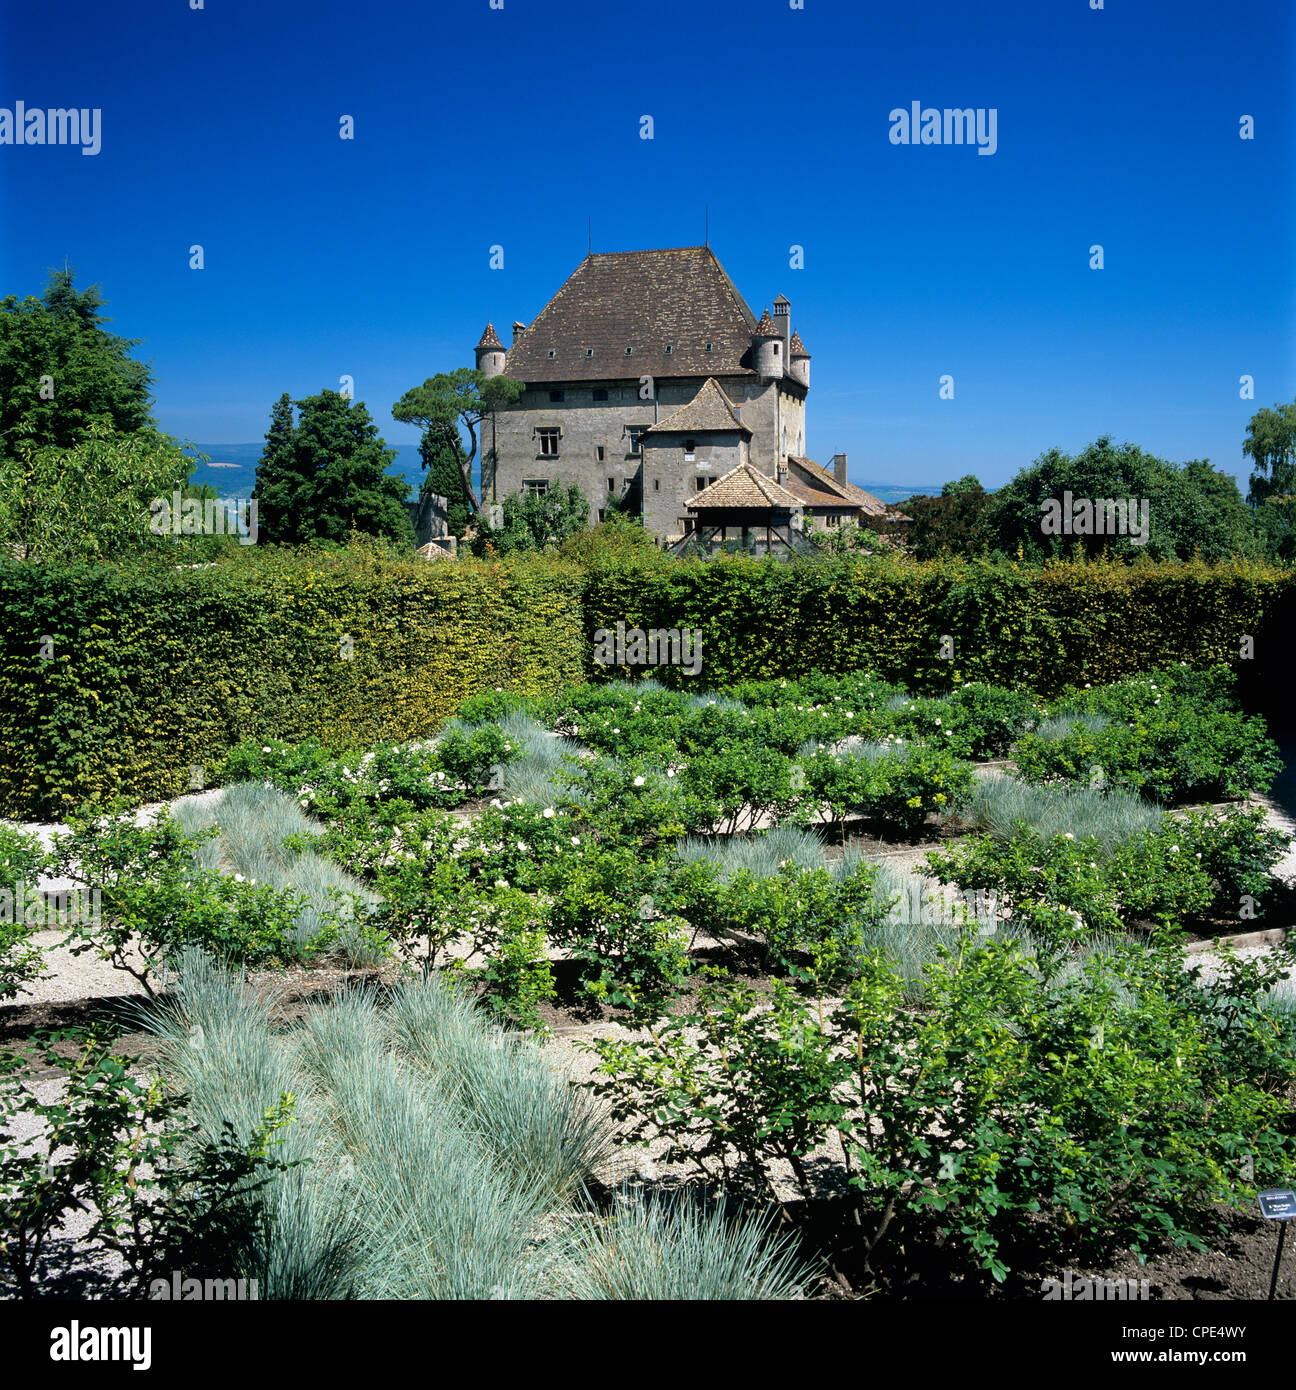 The Chateau and Jardin des Cinq Sens (Garden of the Five Senses), Yvoire, Lake Geneva (Lac Leman), Rhone Alpes, France, Europe Stock Photo